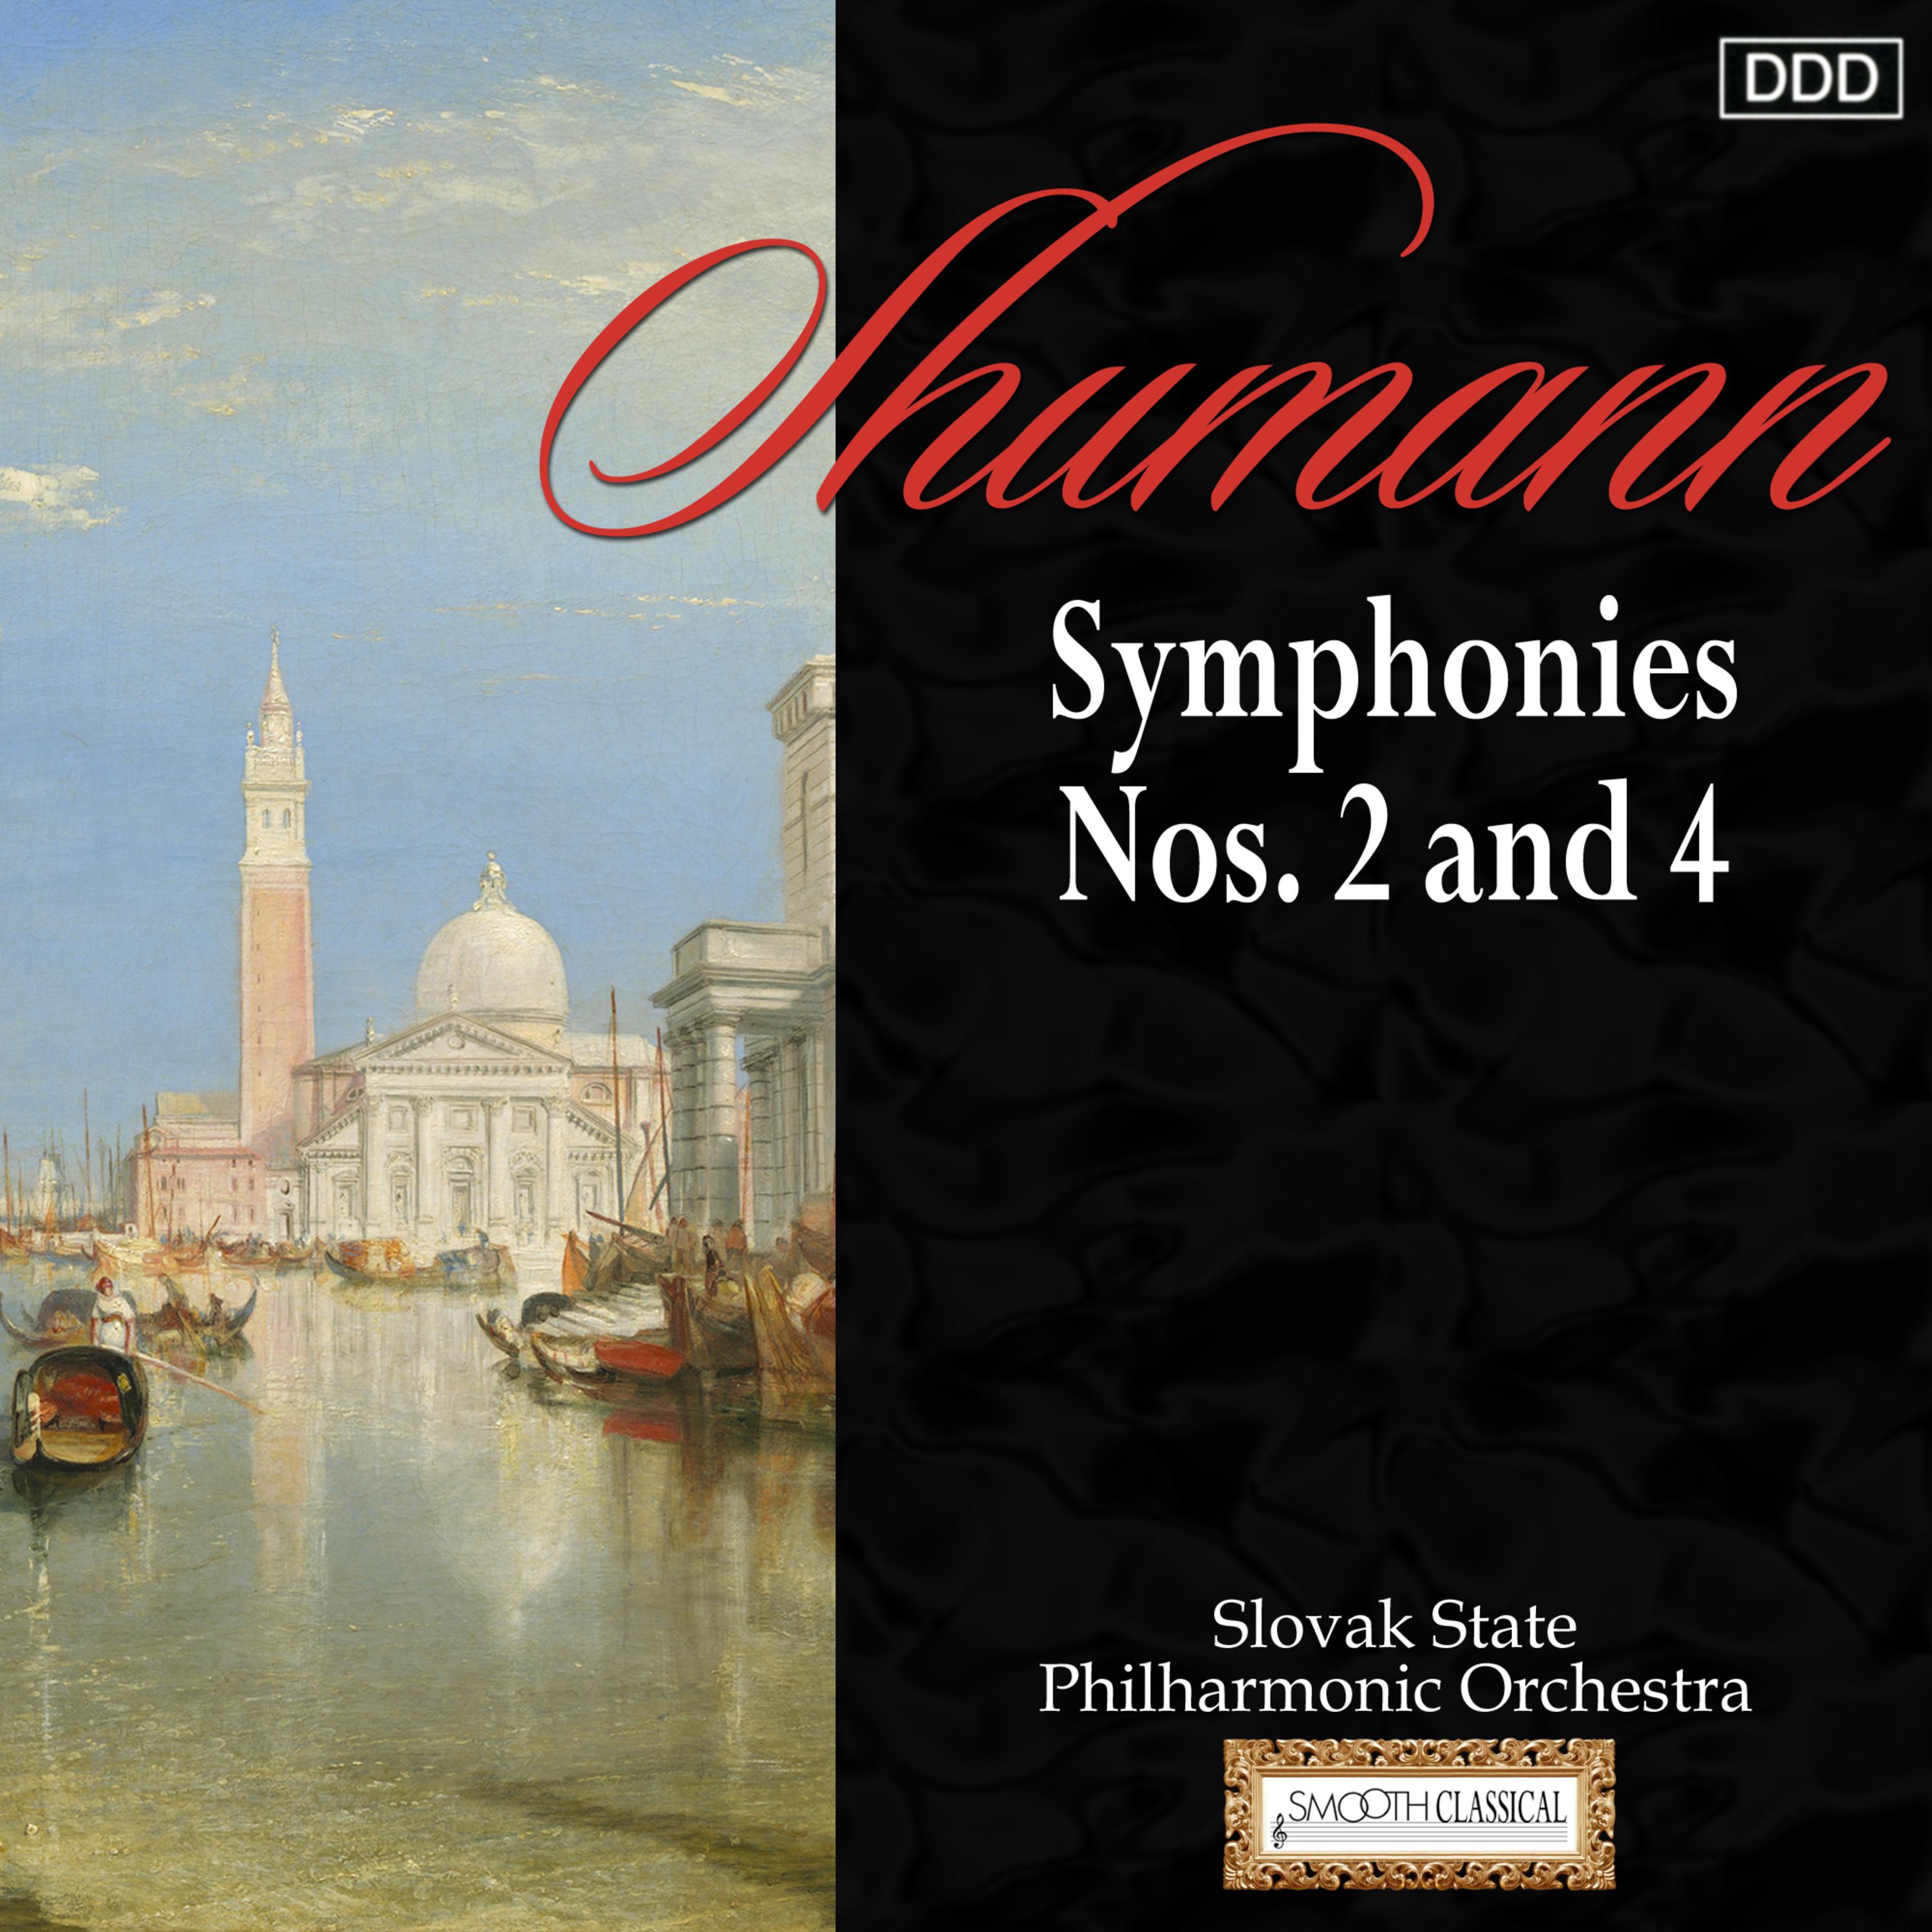 Symphony No. 2 in C Major, Op. 61: III. Adagio espressivo